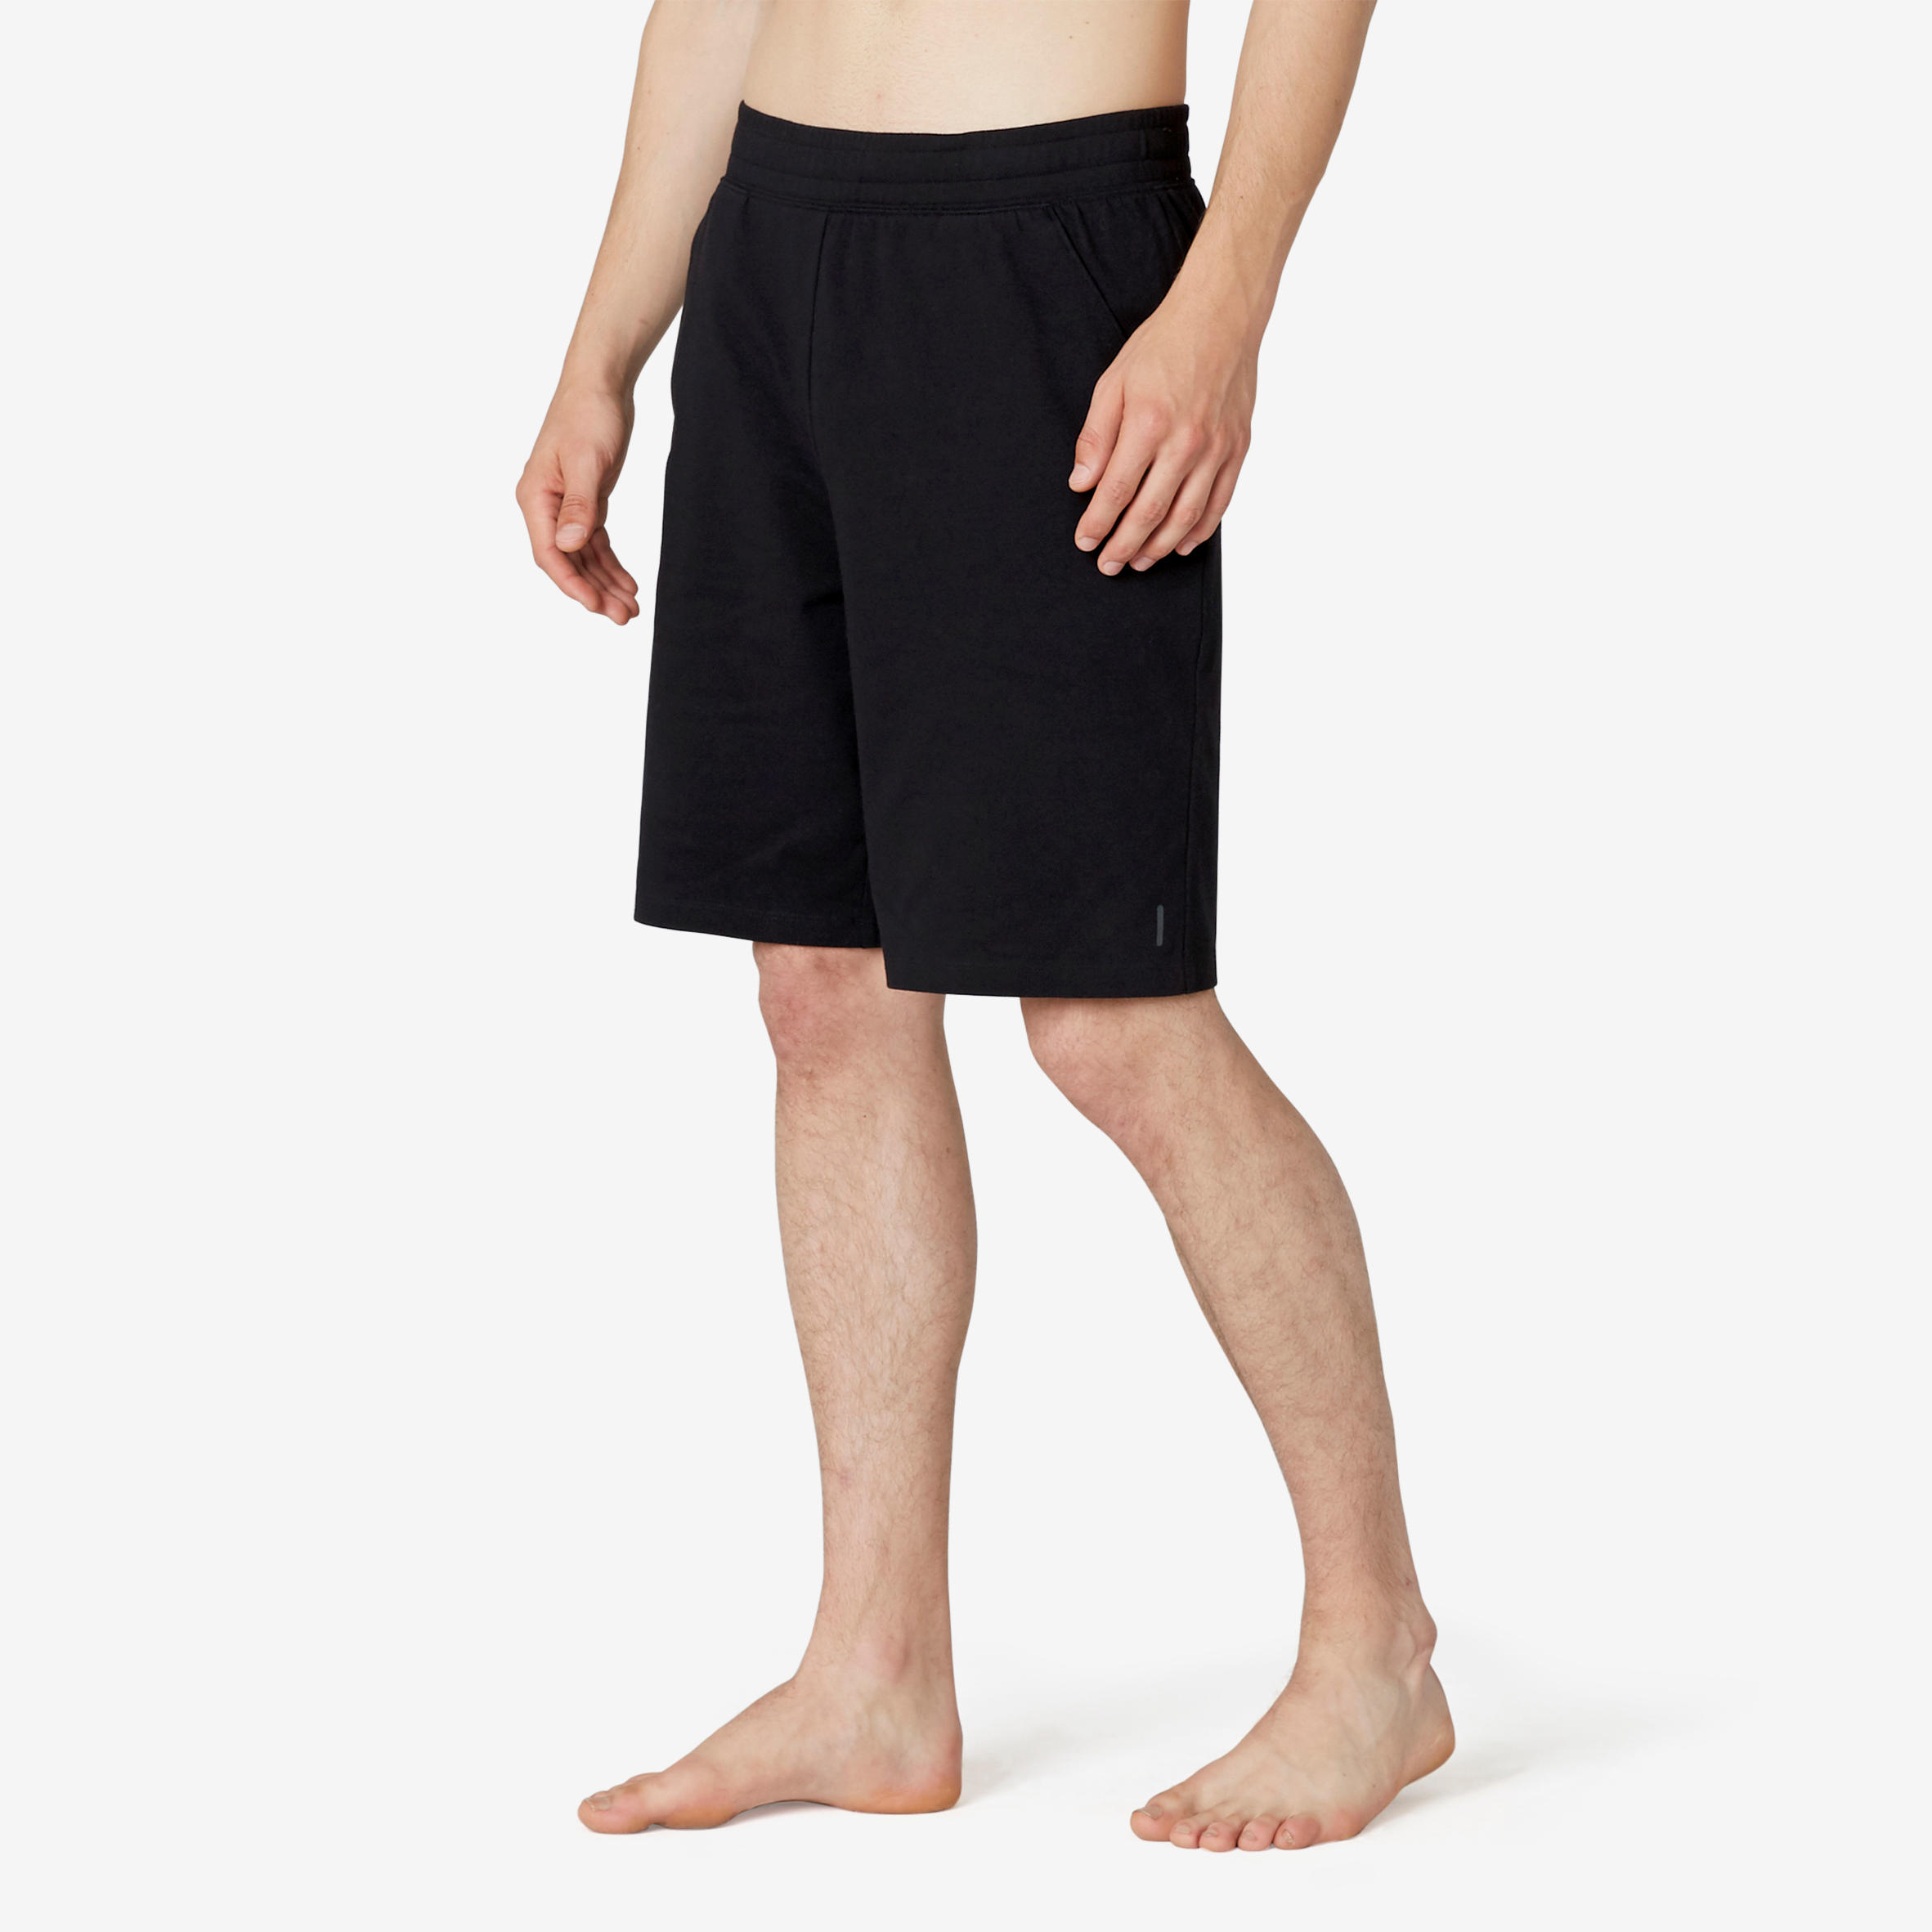 decathlon nylon shorts